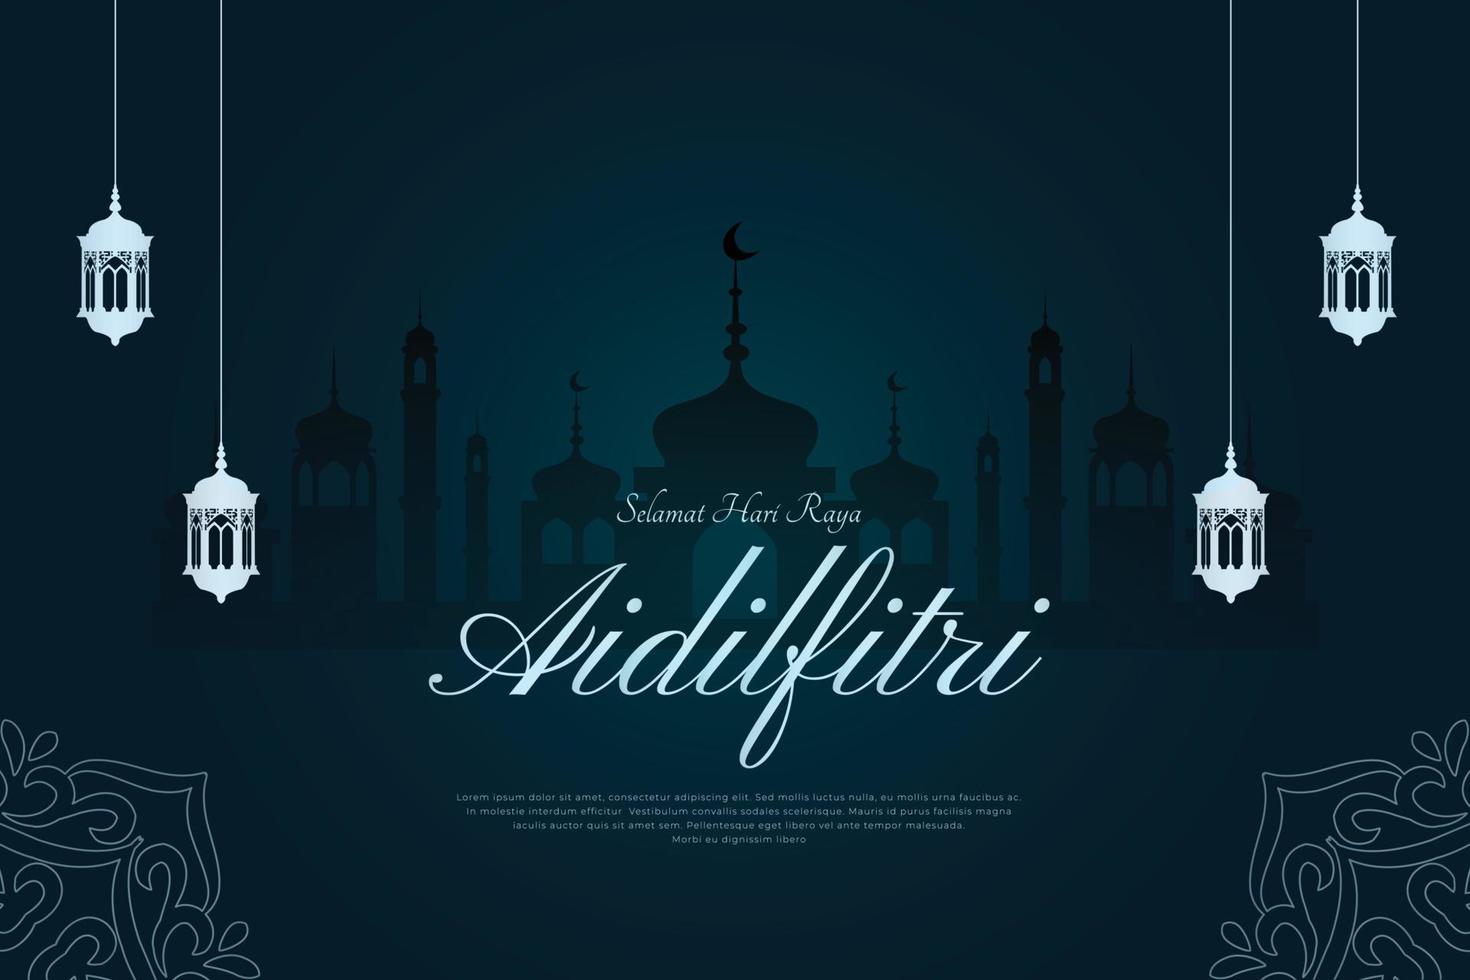 Islamic greeting card happy Eid Al-Fitr Islamic background vector